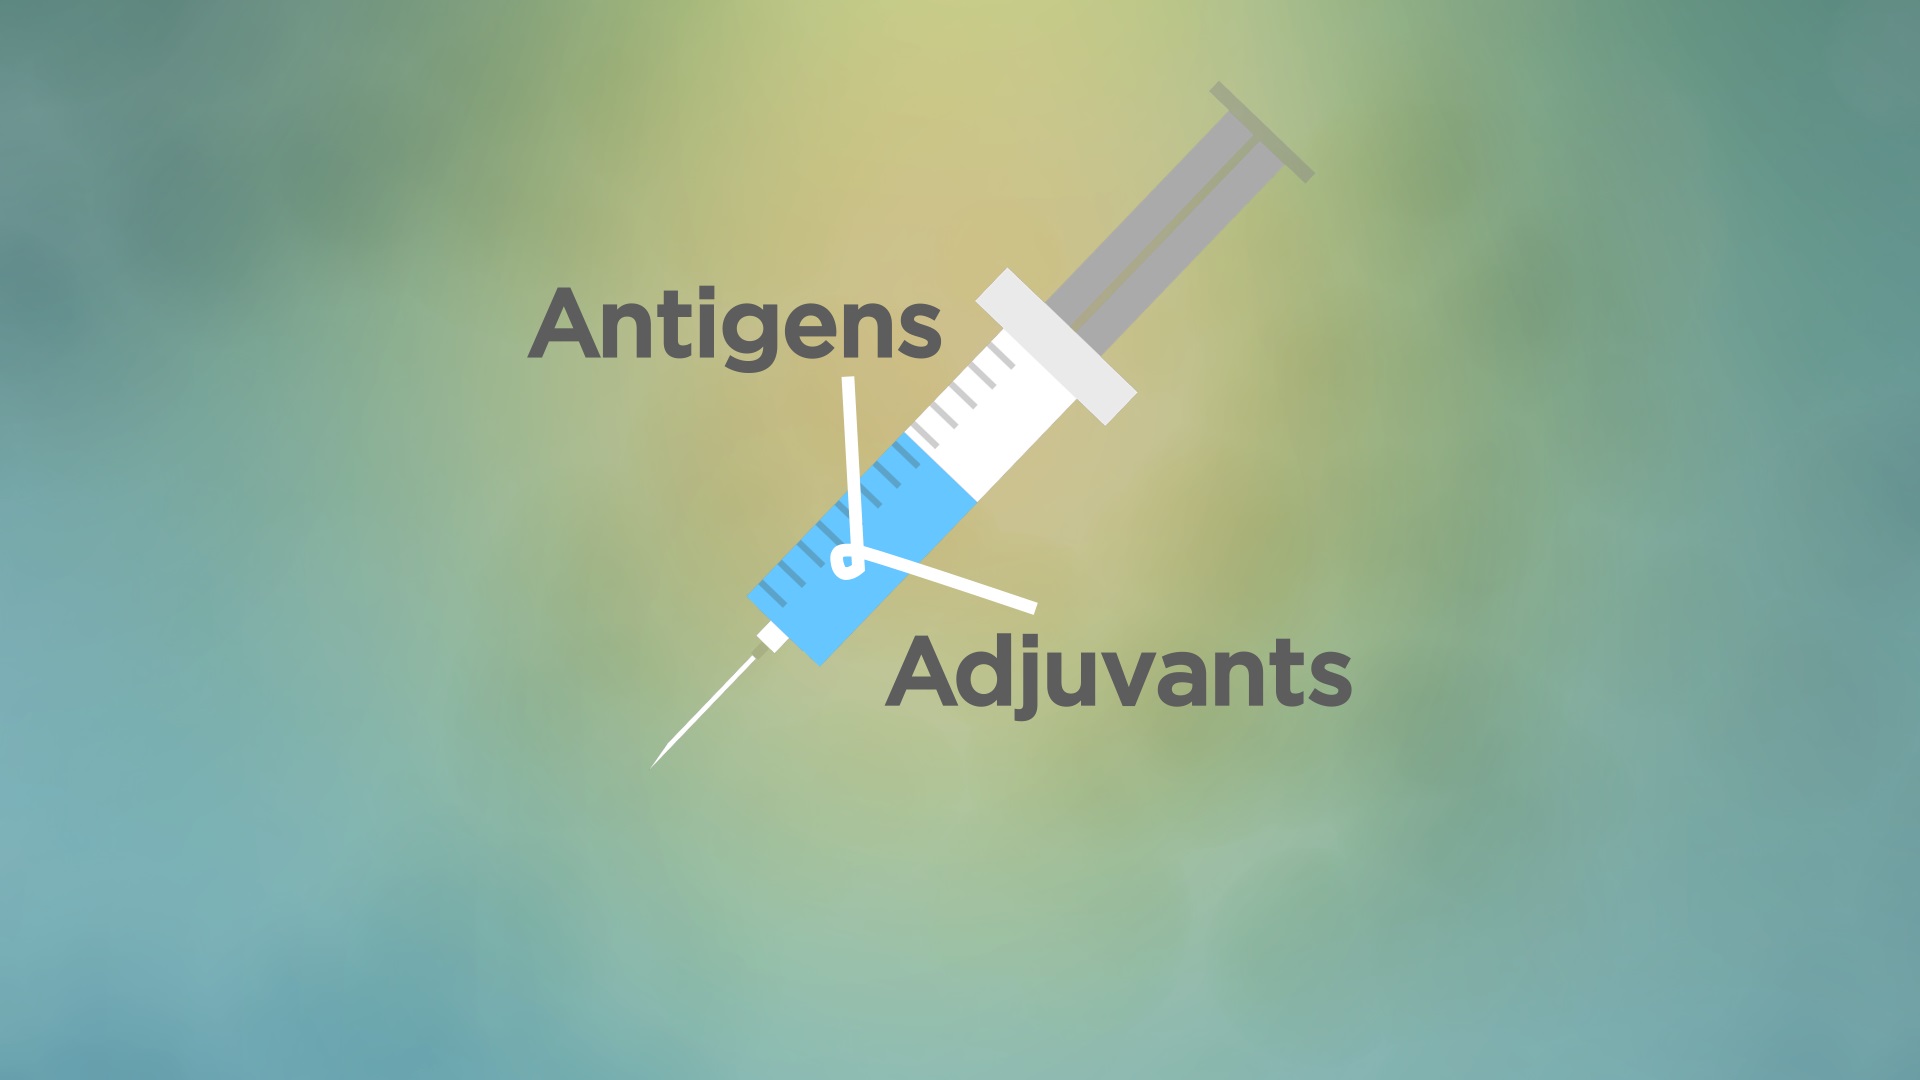 Illustration of a syringe with text labels ‘antigens’ and ‘adjuvants’